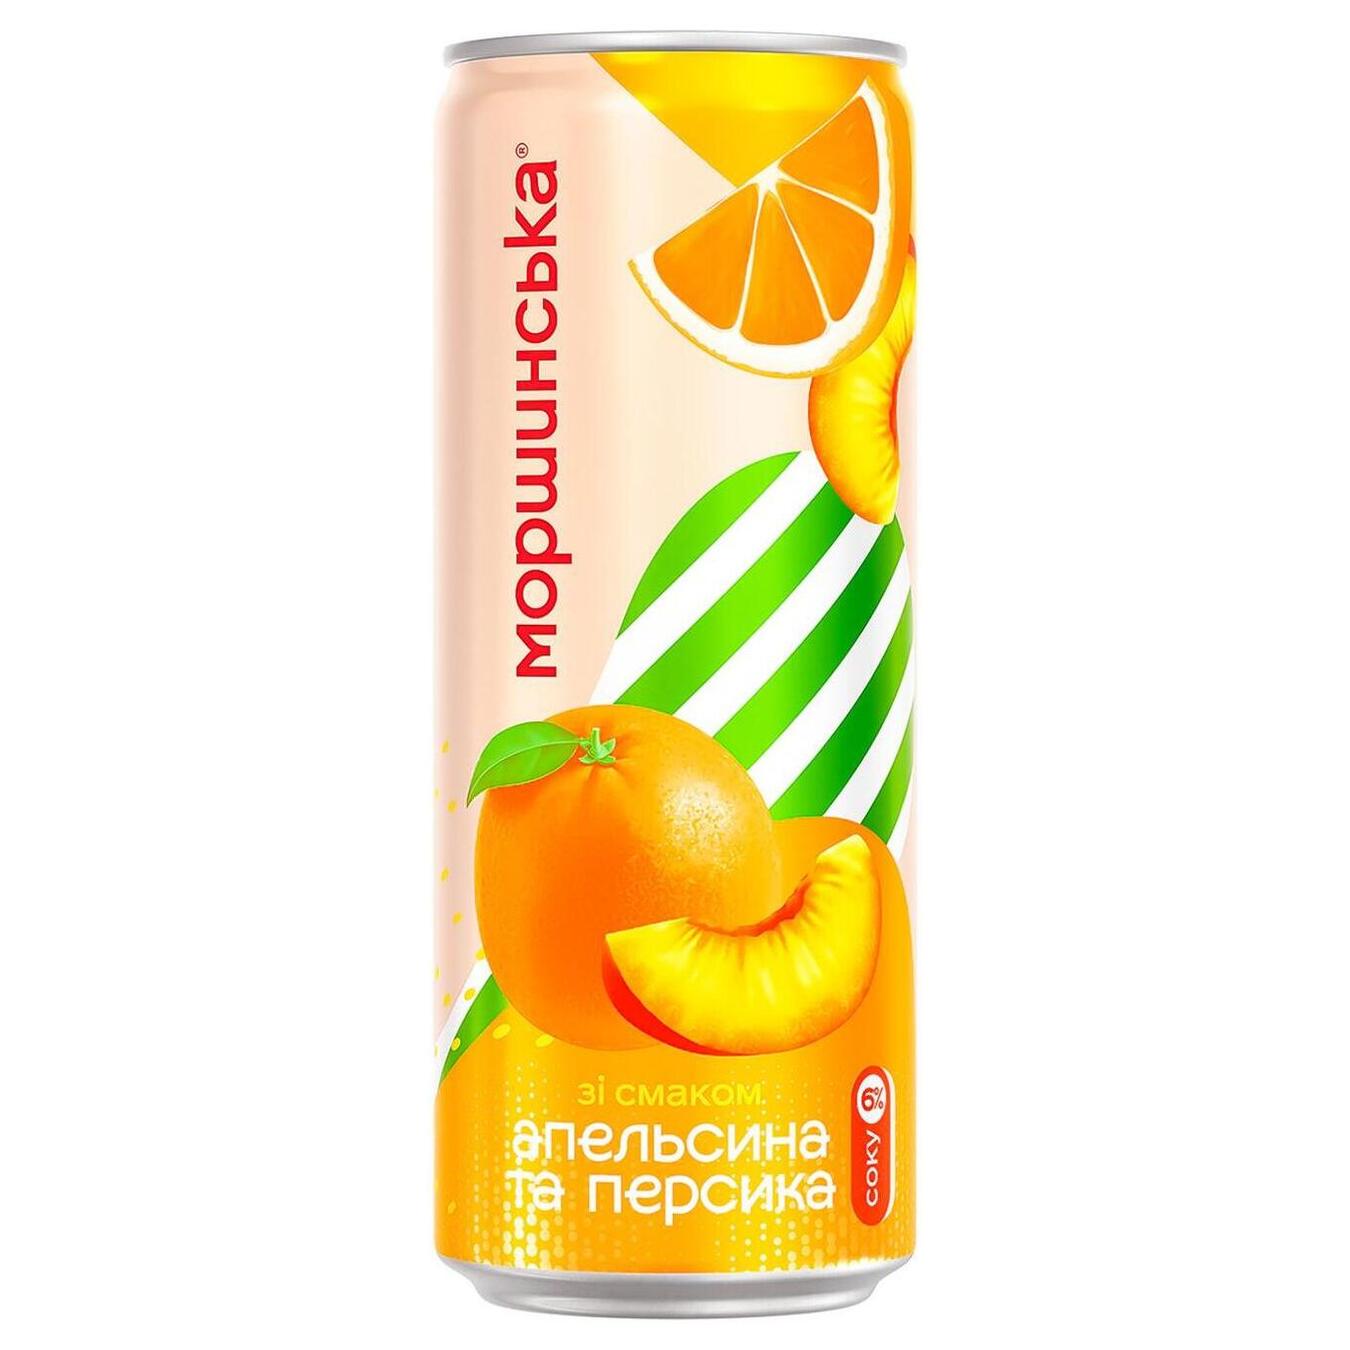 Carbonated drink Morshynska orange-peach lemonade 0.33 l iron can